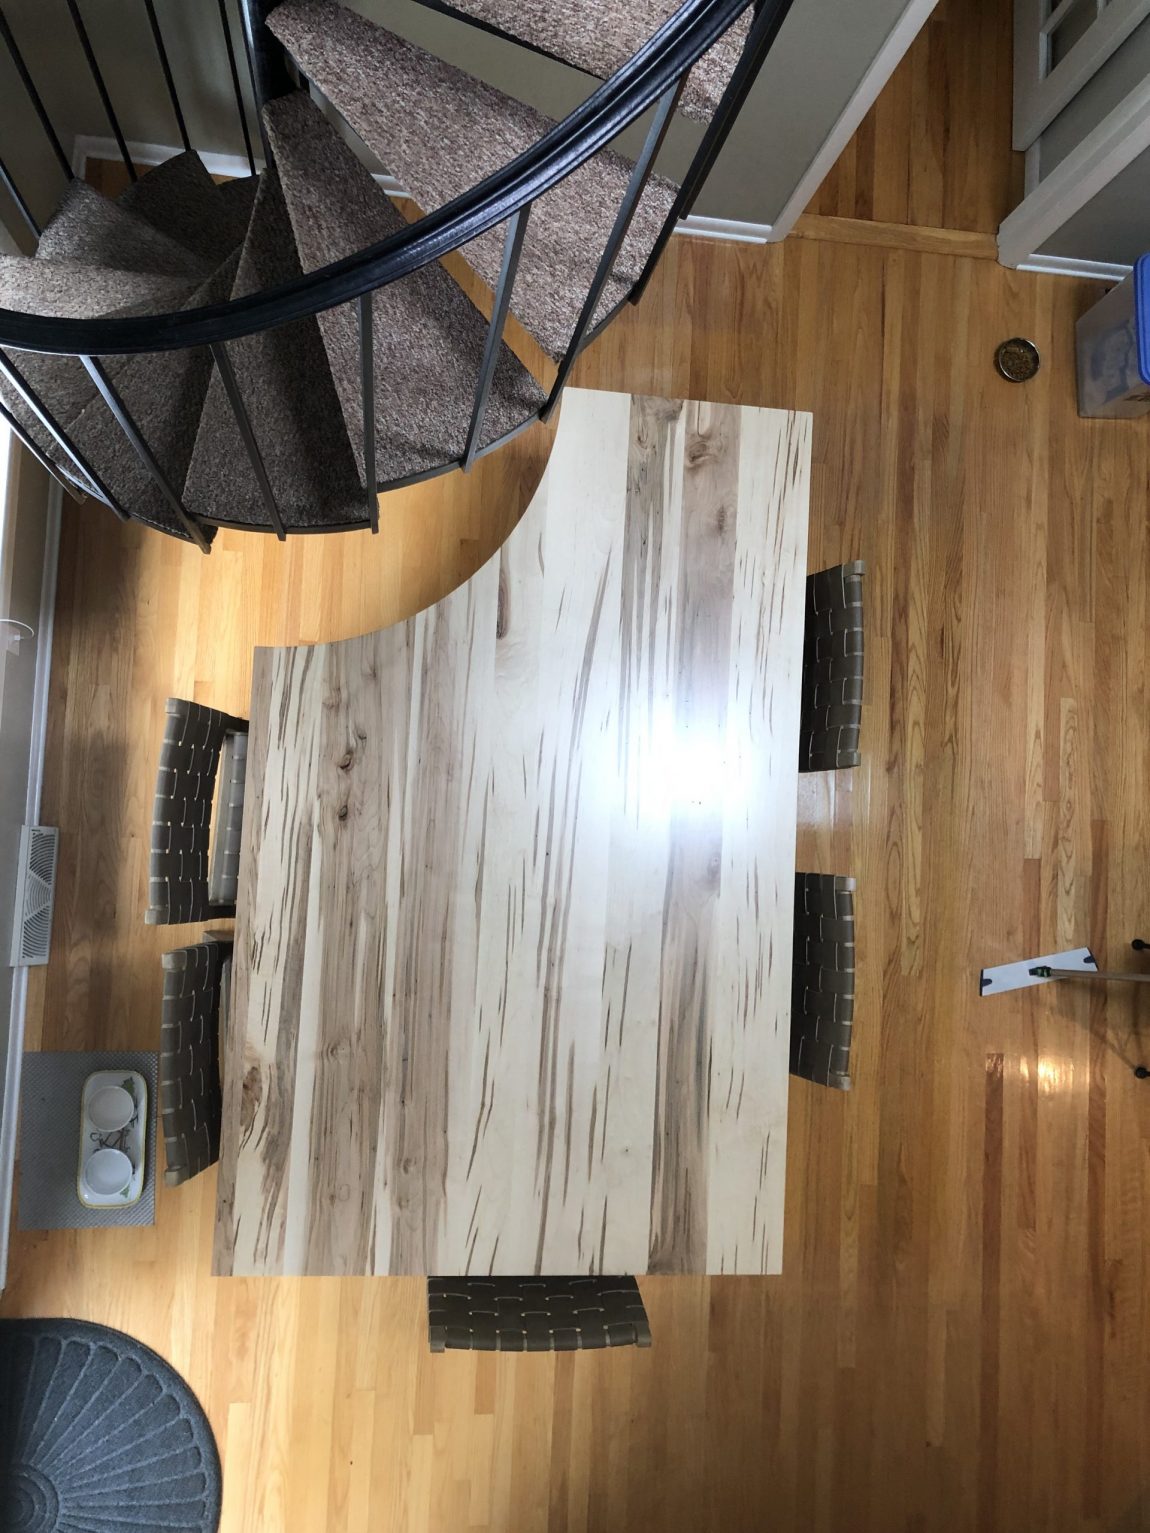 Custom Table